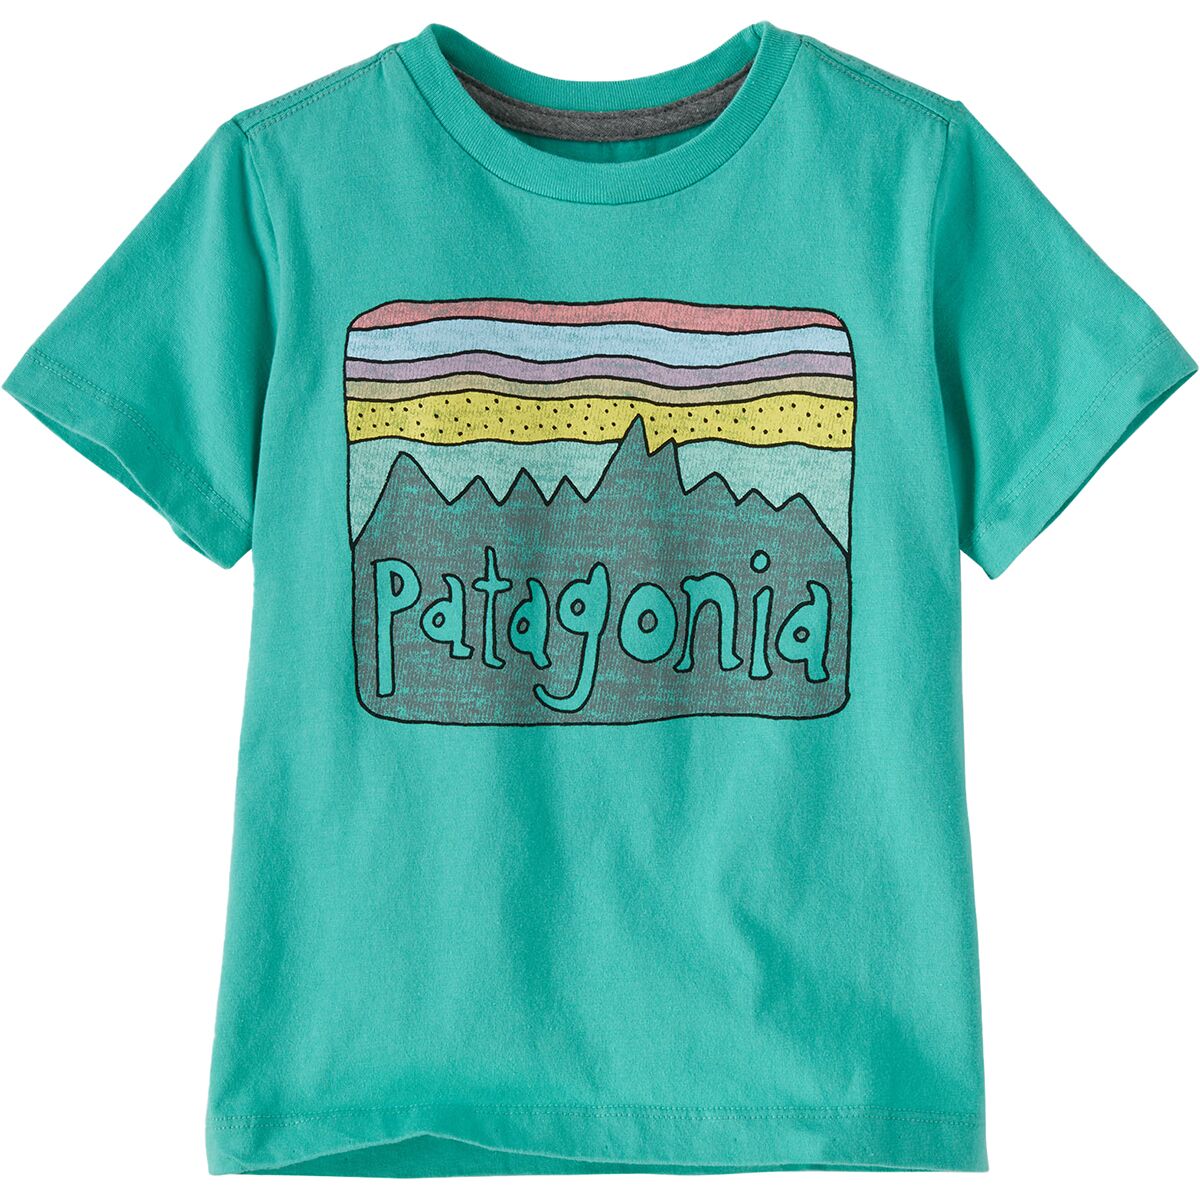 Patagonia Regenerative Fitz Roy Skies T-Shirt - Toddlers'